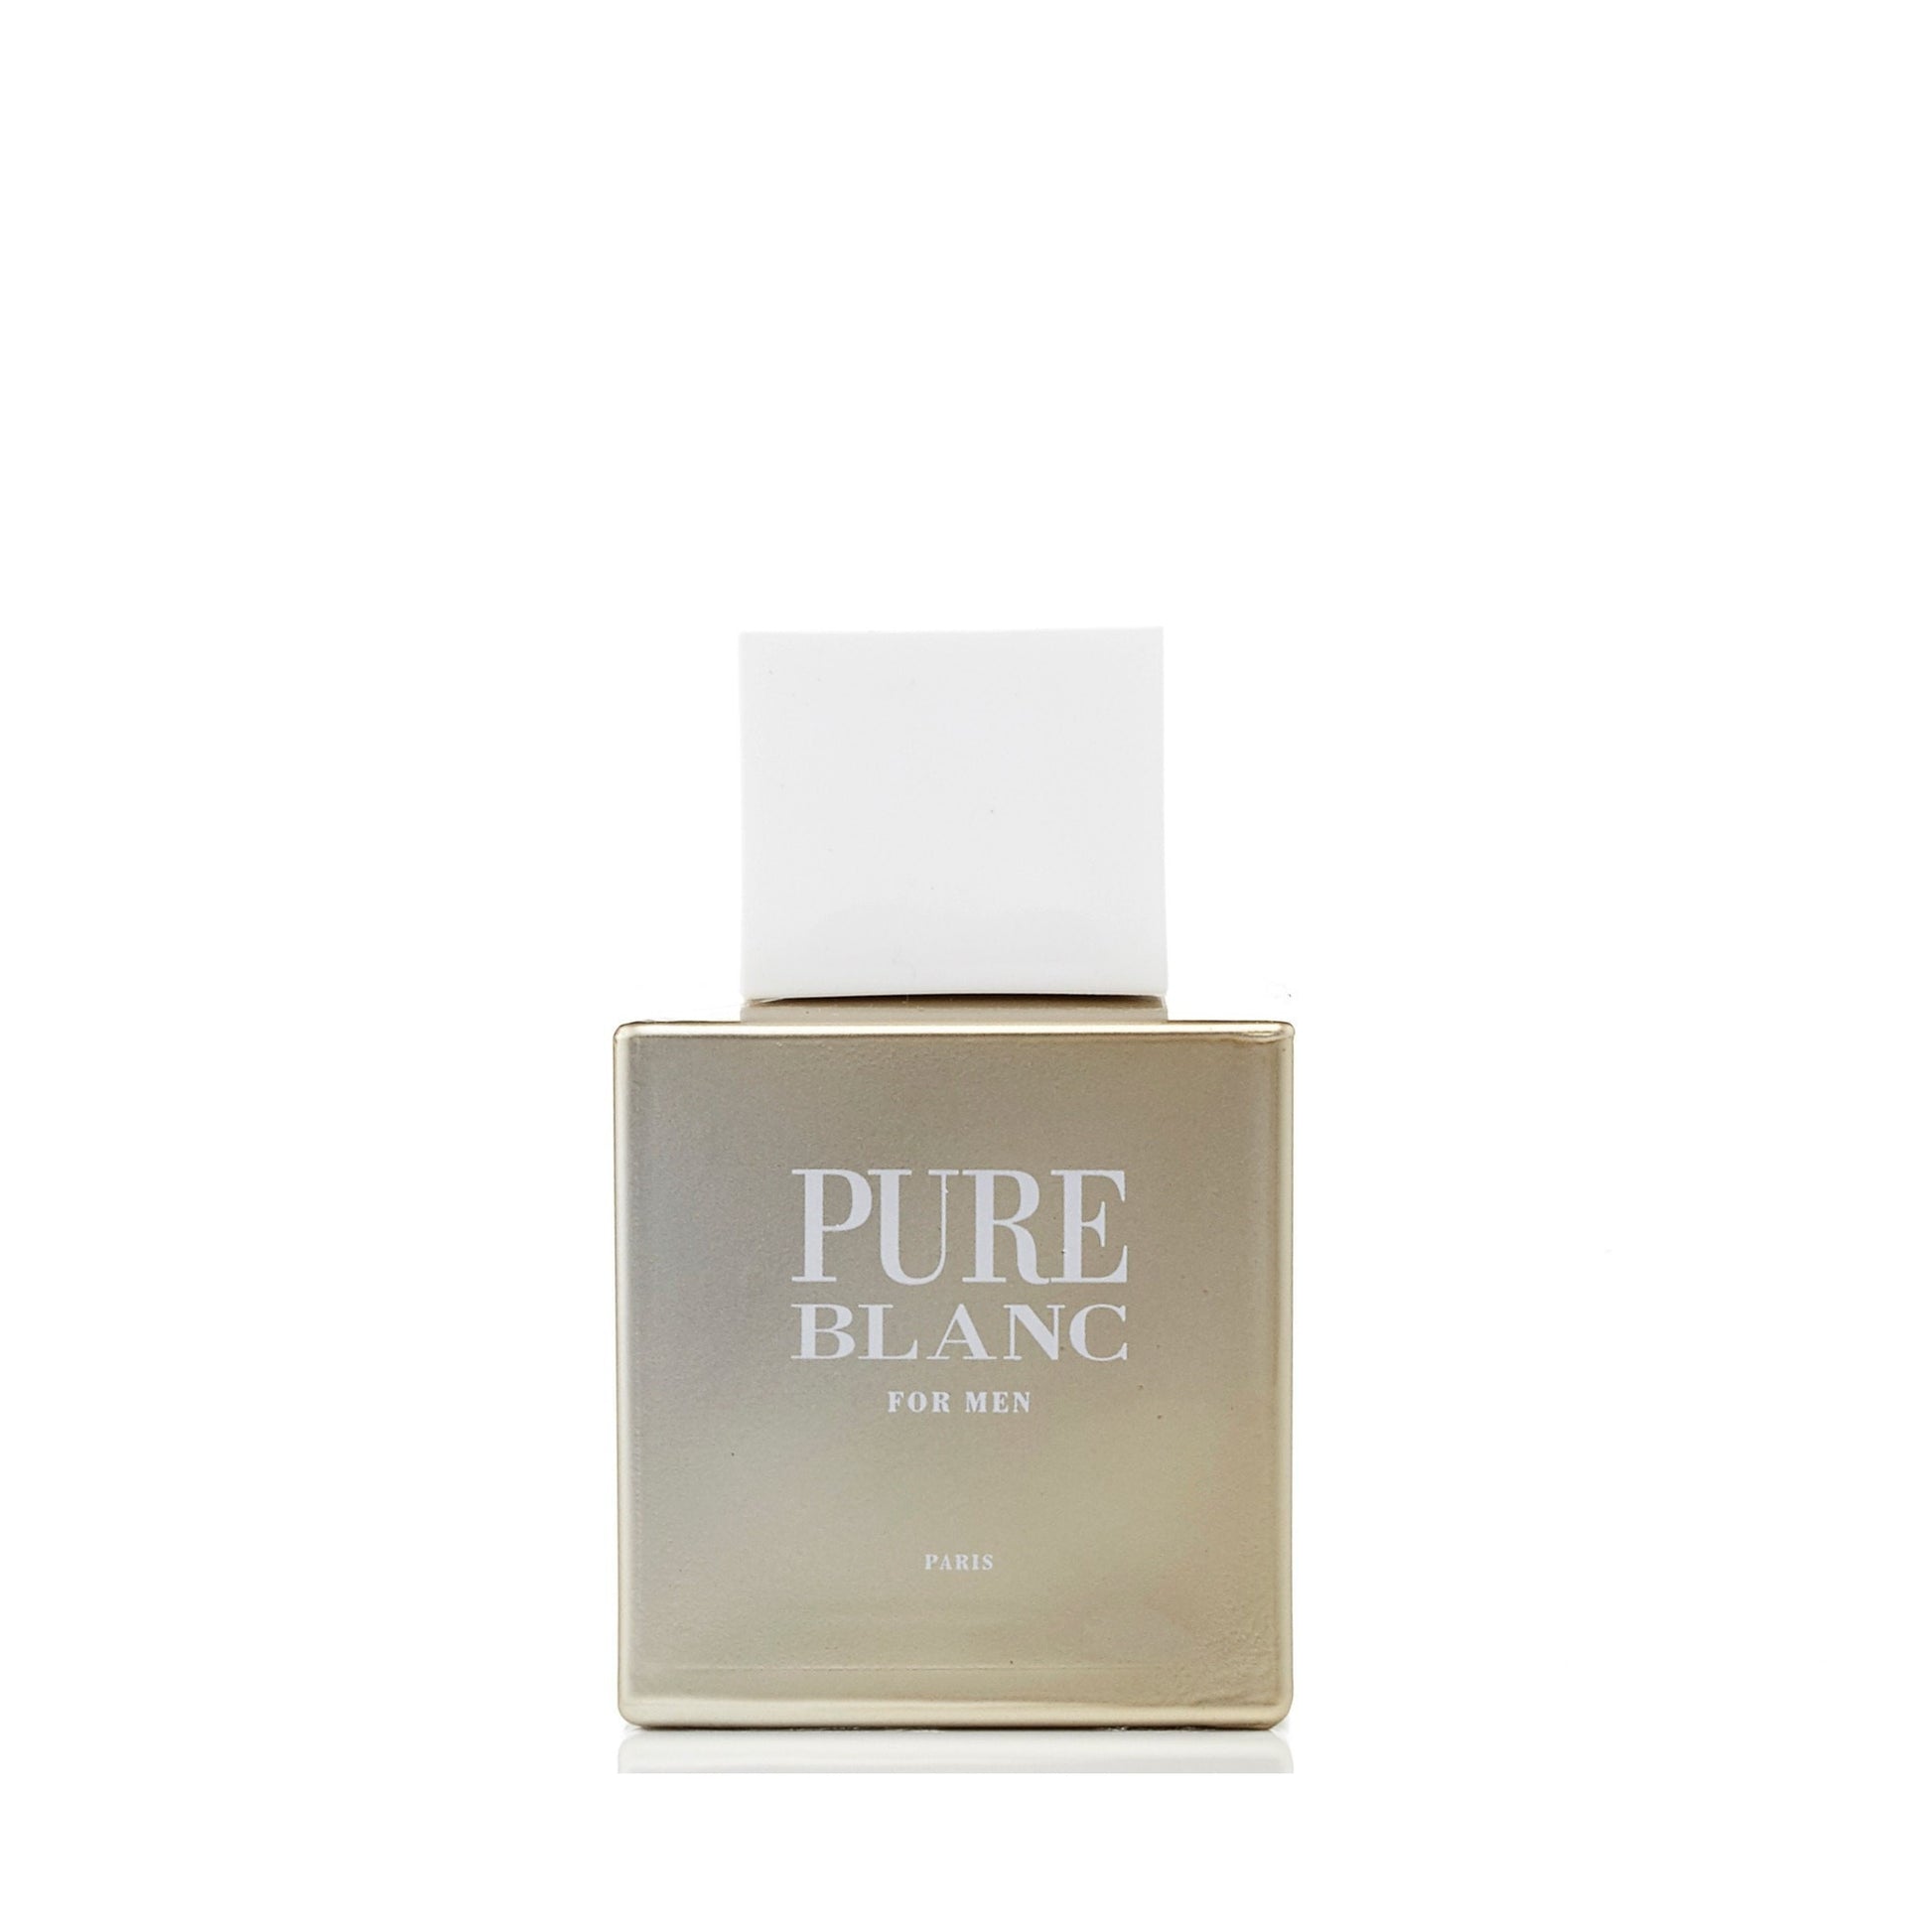 Pure Blanc Eau de Toilette Mens Spray 3.4 oz. Click to open in modal